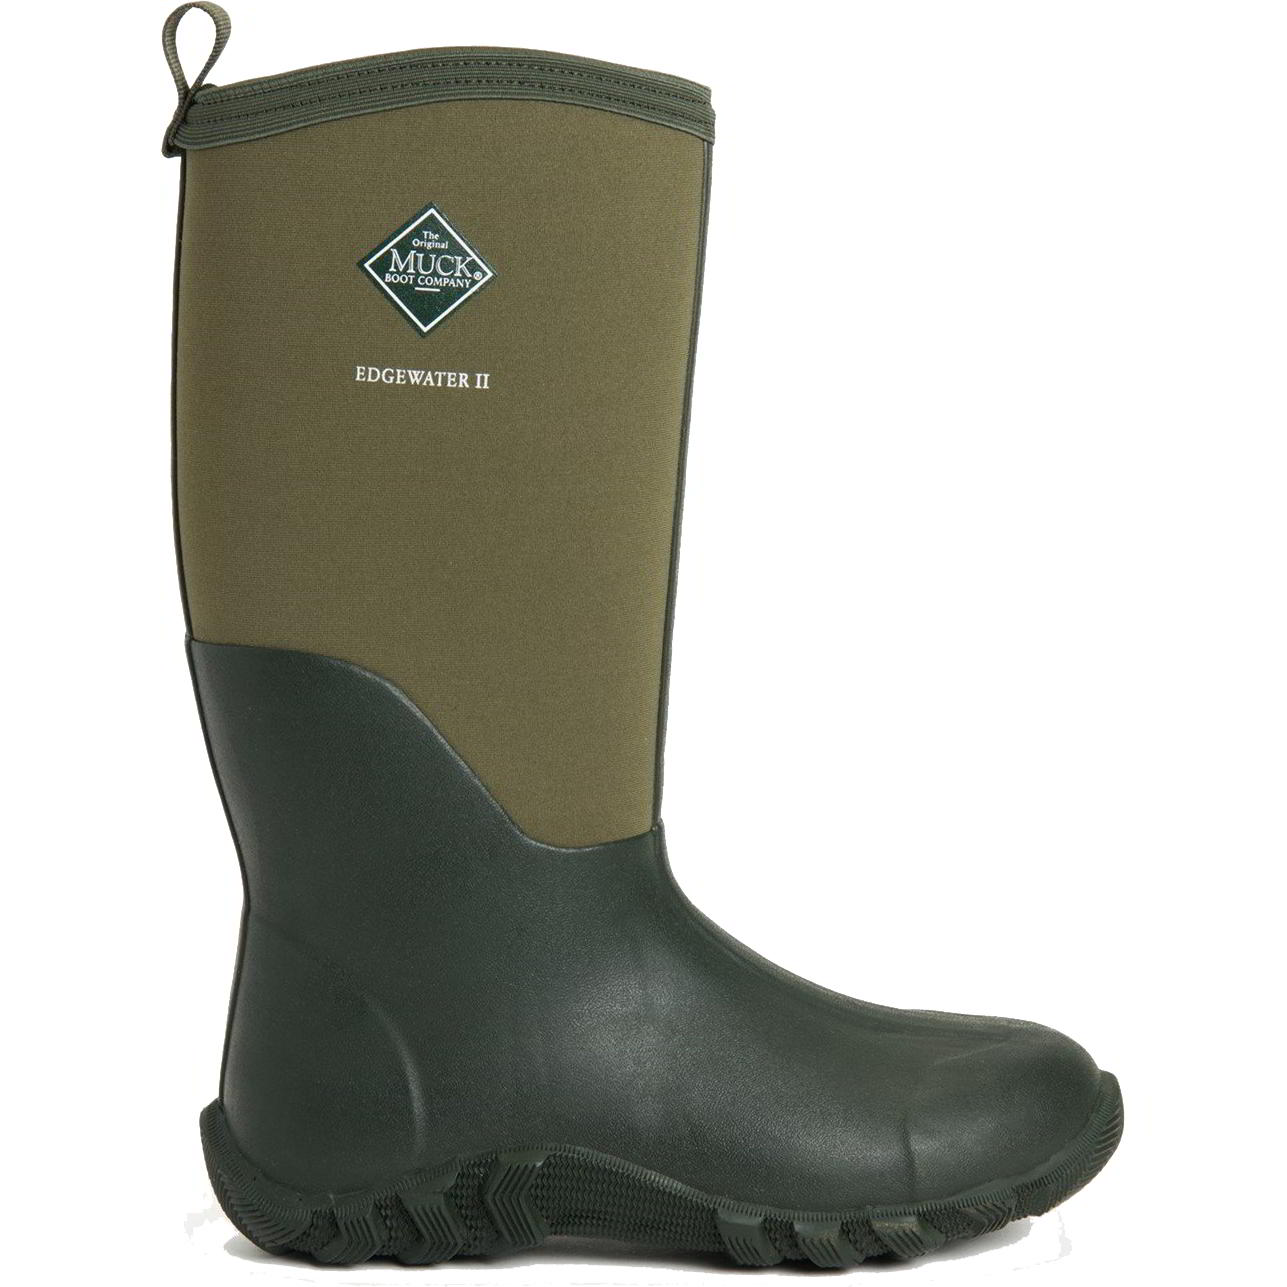 Muck Boots Men's Edgewater II Neoprene Wellies Rain Boots - UK 10